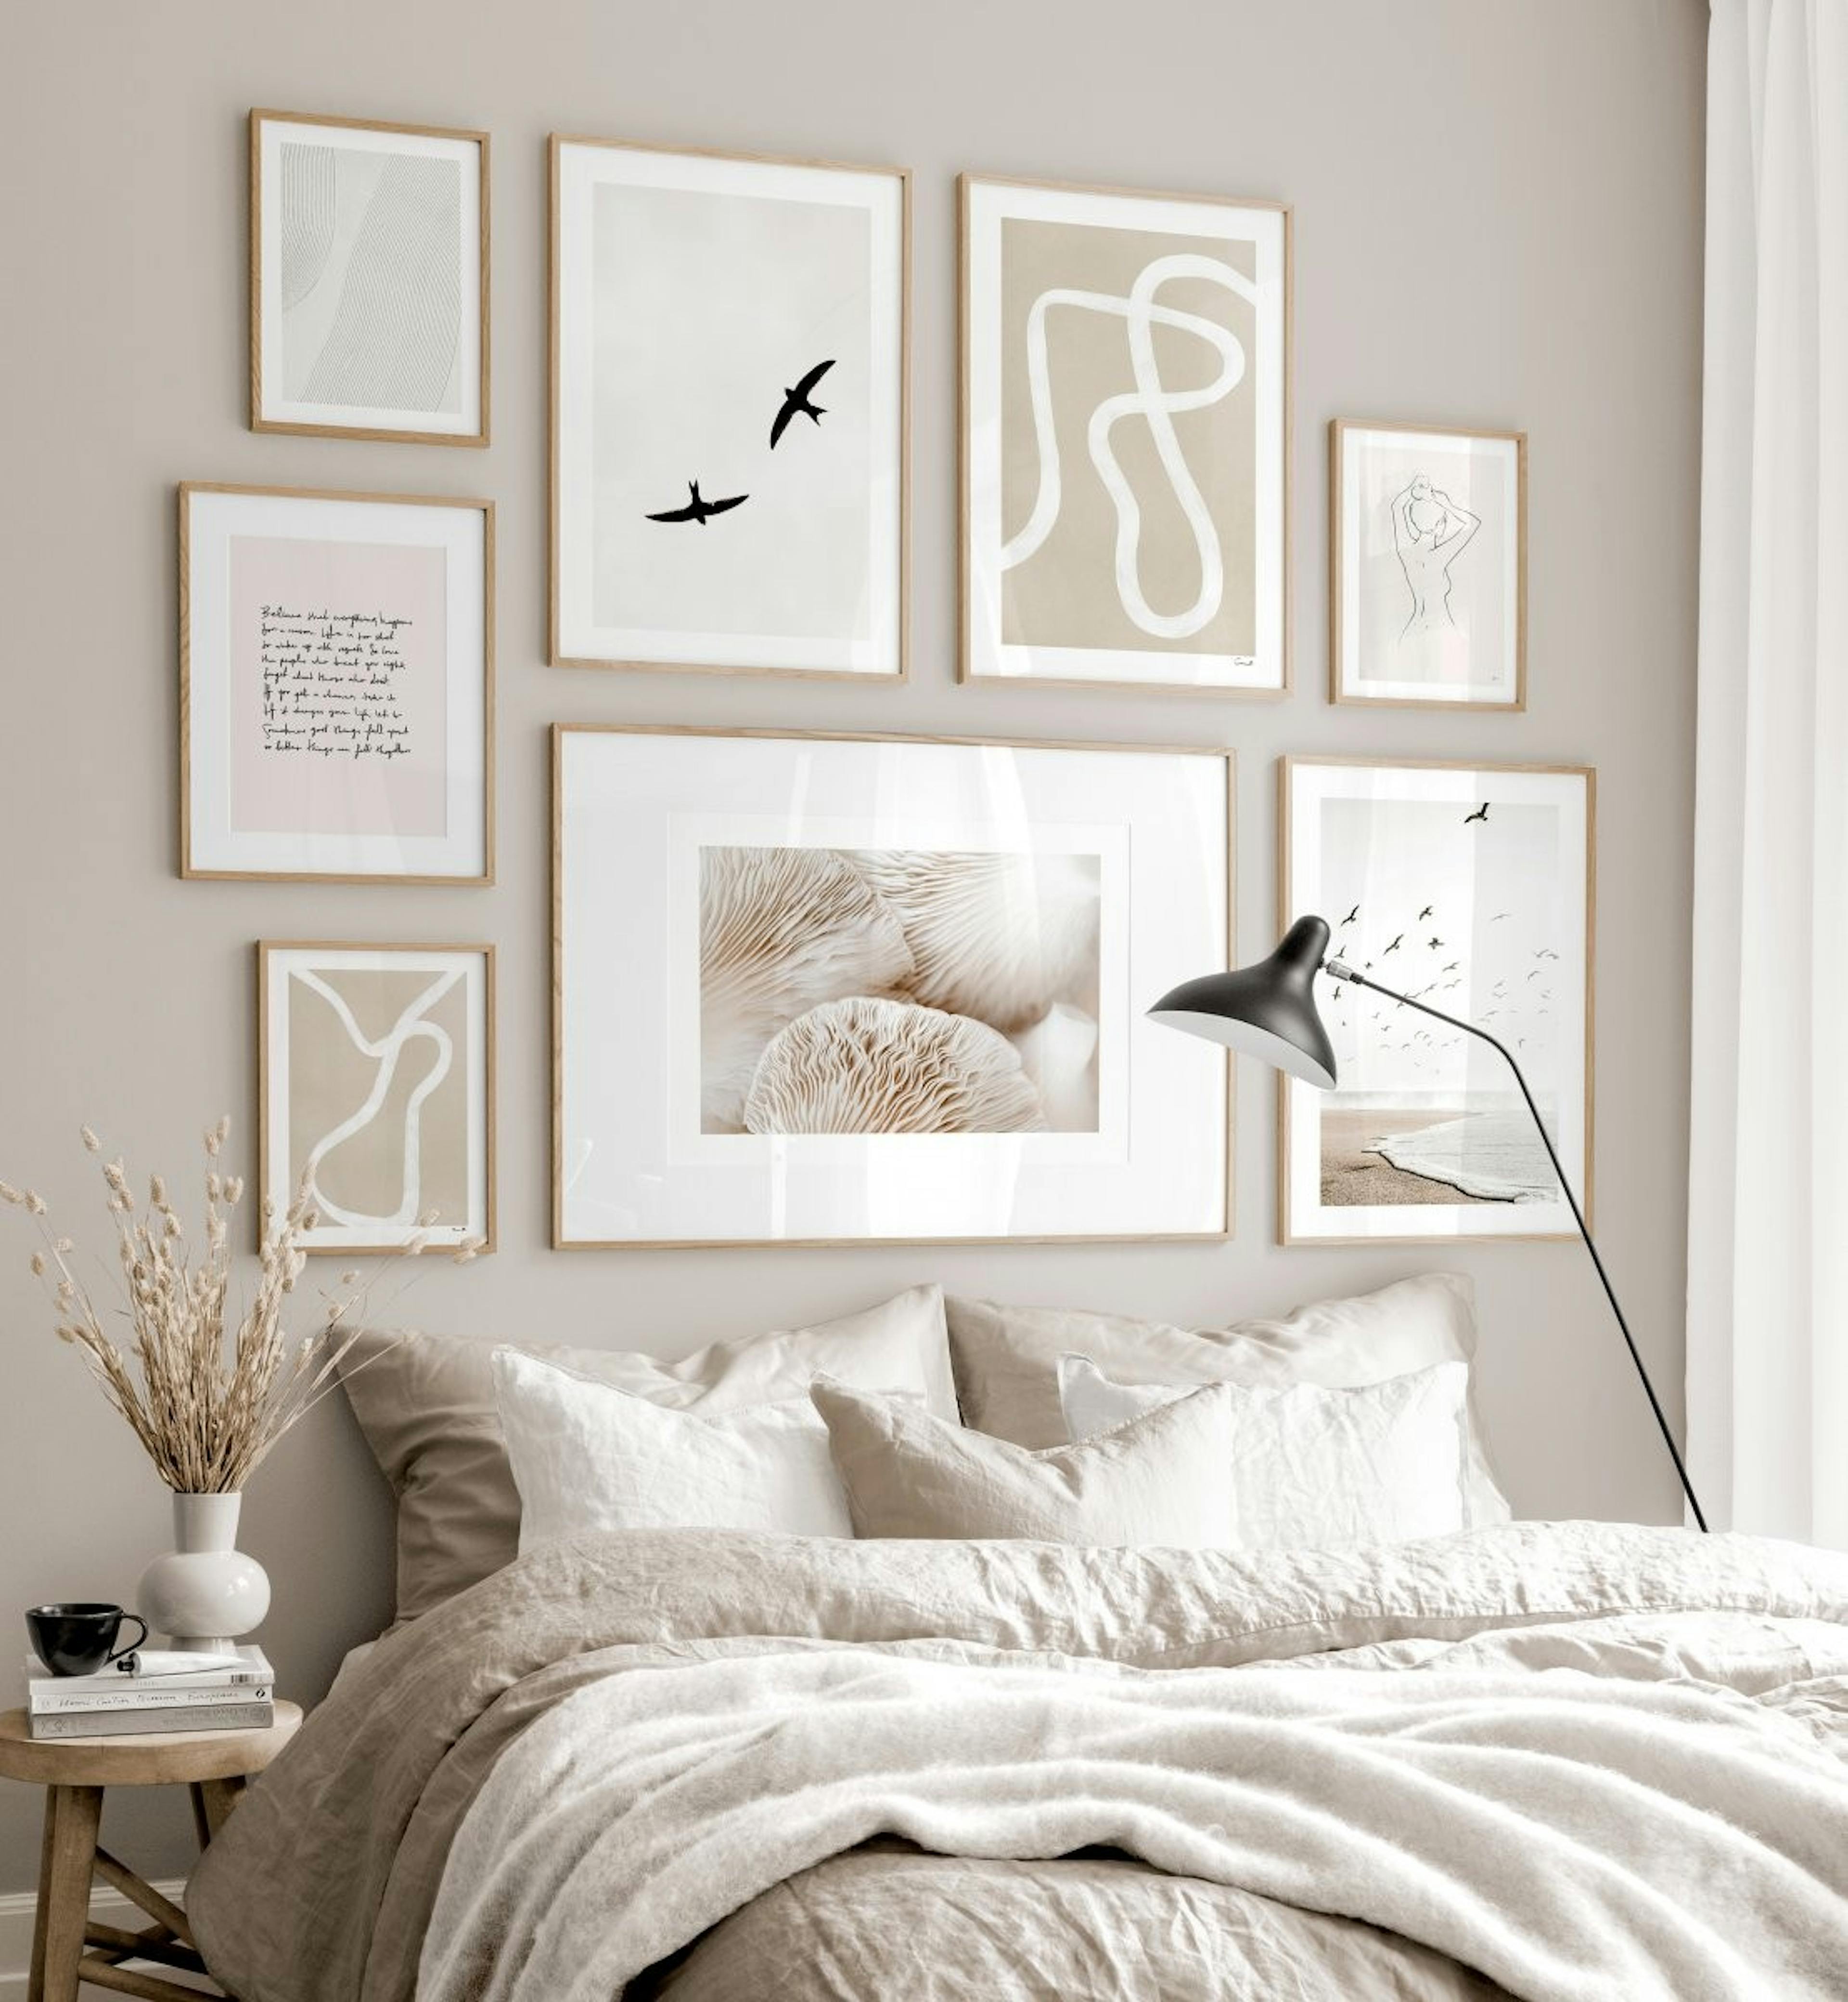 Trendy bildevegg beige hvit soverom interiør beige plakater eikerammer